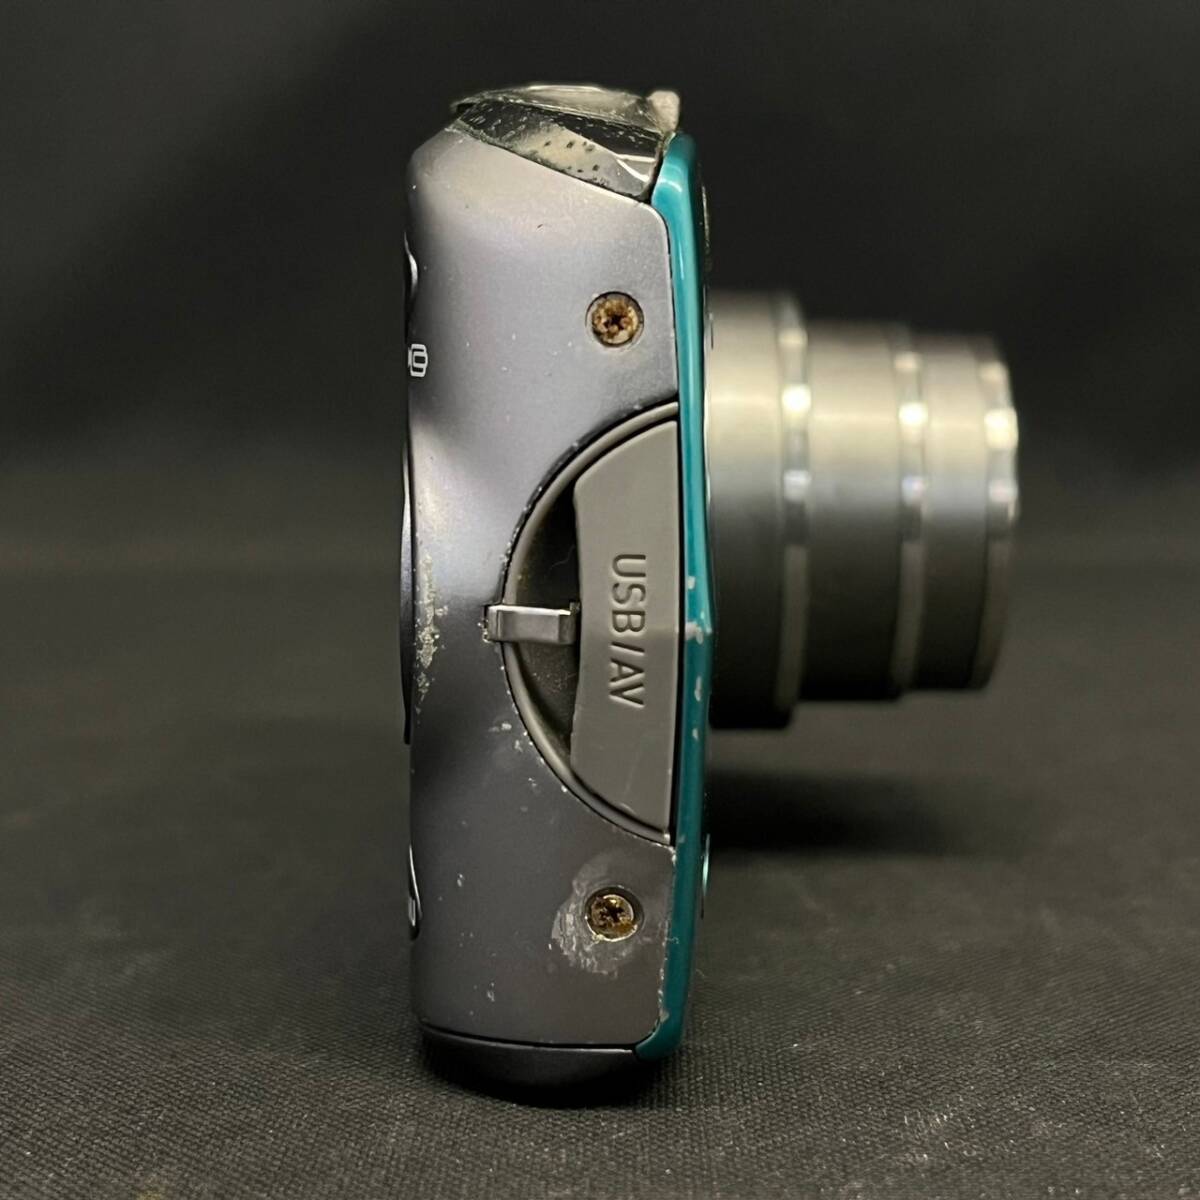 BDd198R 60 CASIO EXILIM EX-Z2300 14.1MEGA PIXELS エクシリム 26mm WIDE OPTICAL 5x f=4.7-23.5mm 1:2.8-6.5 ブルー デジタルカメラの画像5